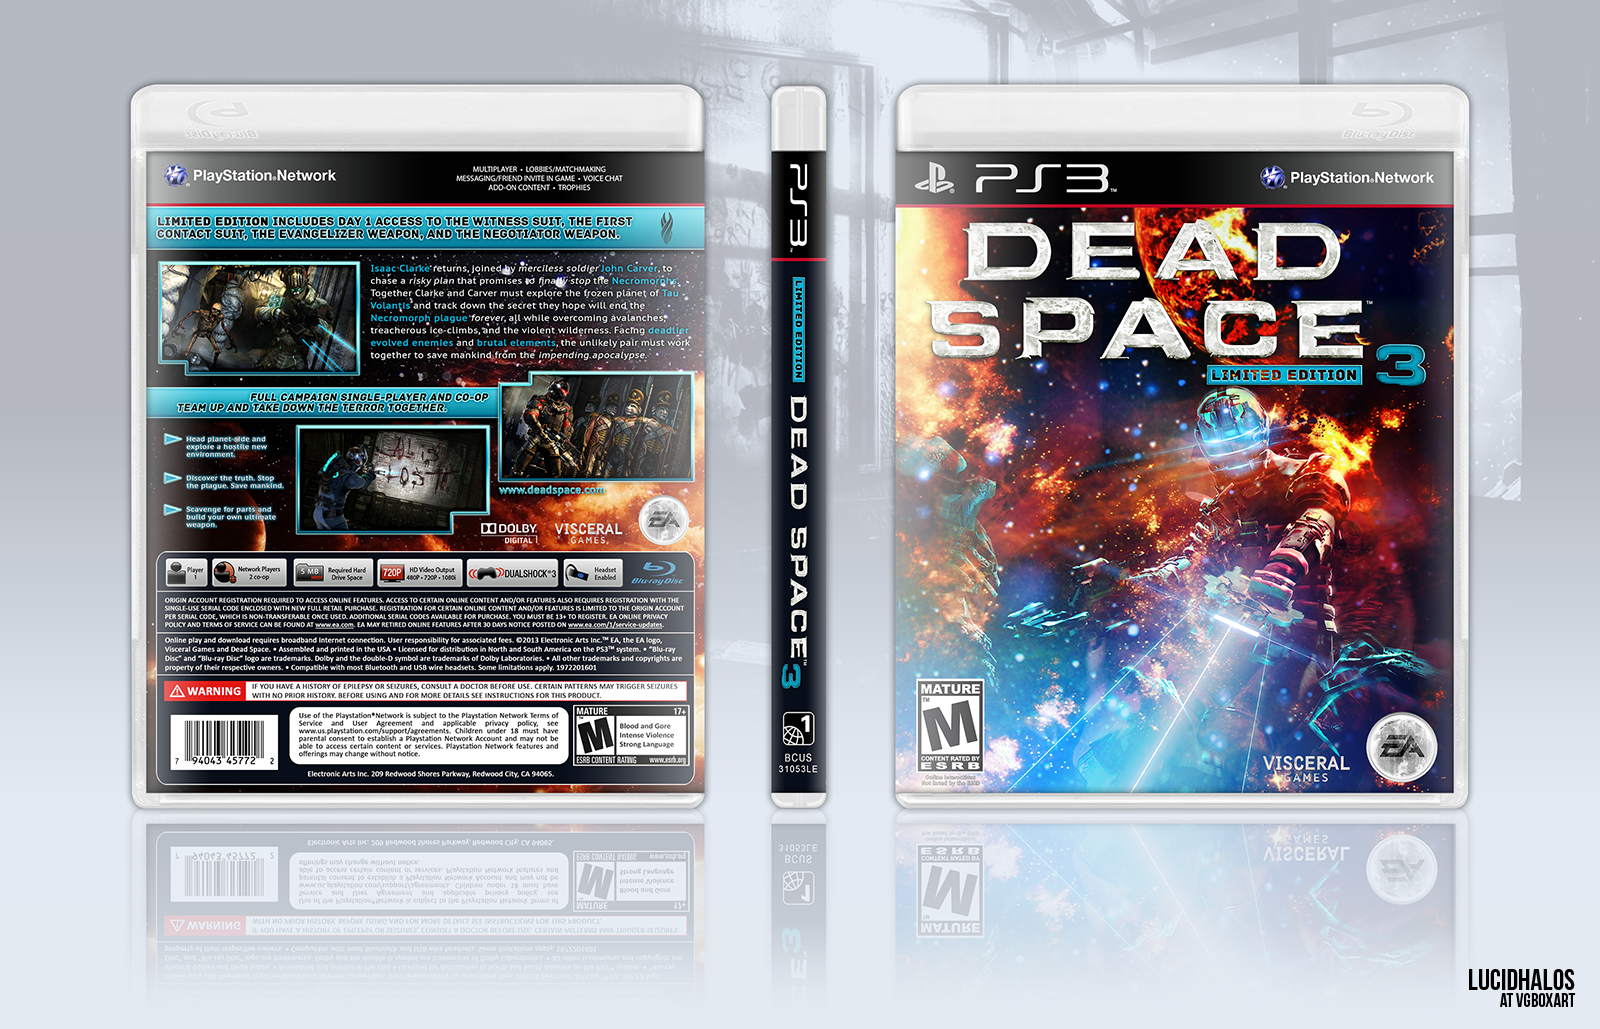 Dead Space 3 Limited Edition для Xbox 360 обложка. PLAYSTATION 3 Dead Space Edition. Dead Space 3 обложка PC. Артбук Dead Space 3 Limited Edition. Limited space